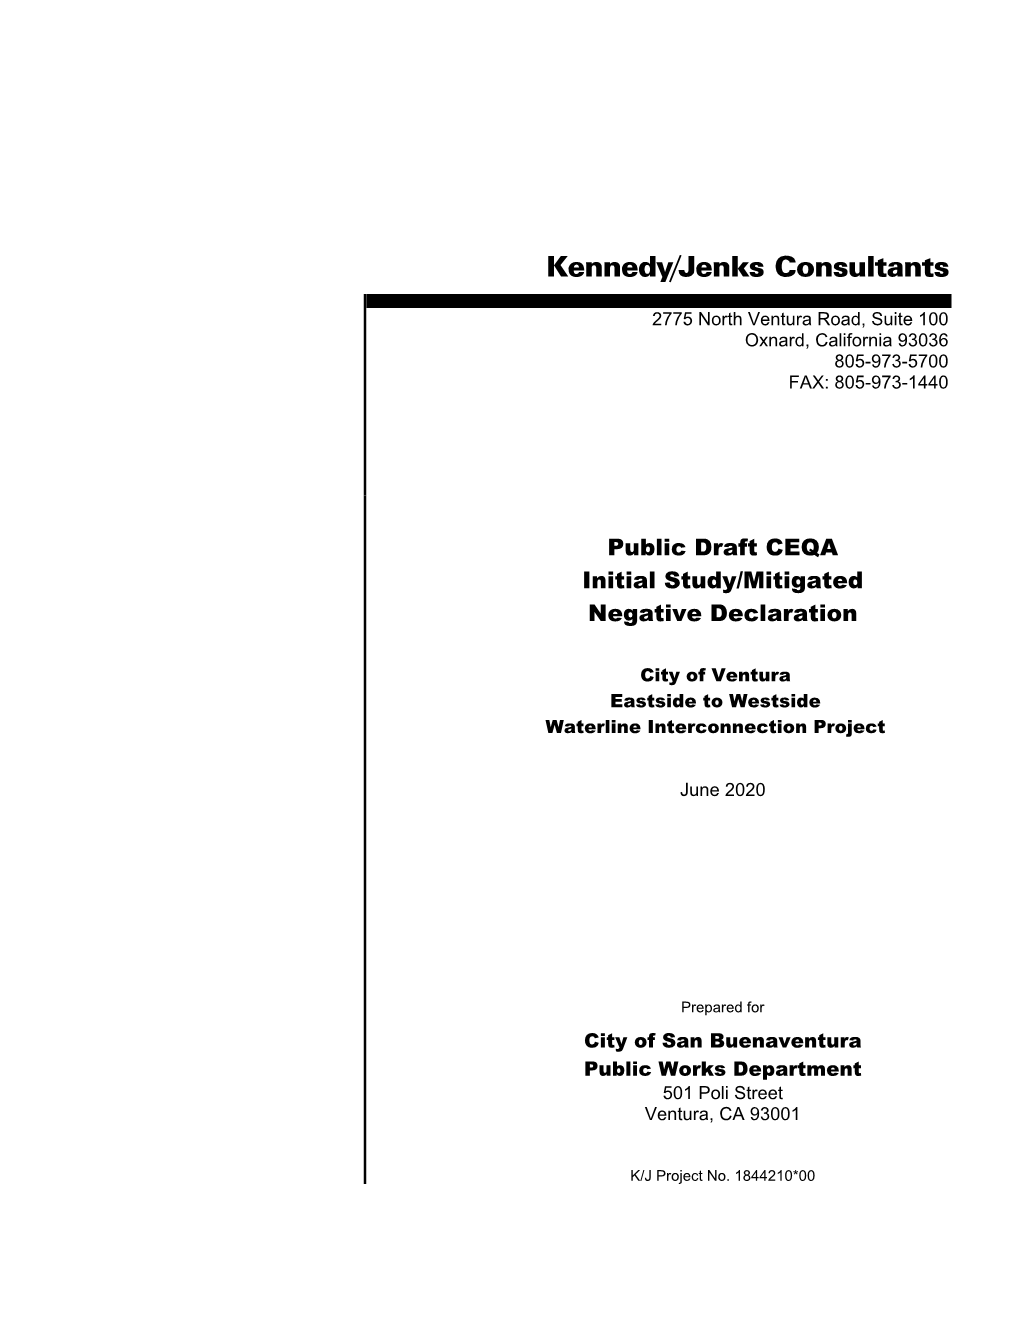 Public Draft CEQA Initial Study/Mitigated Negative Declaration